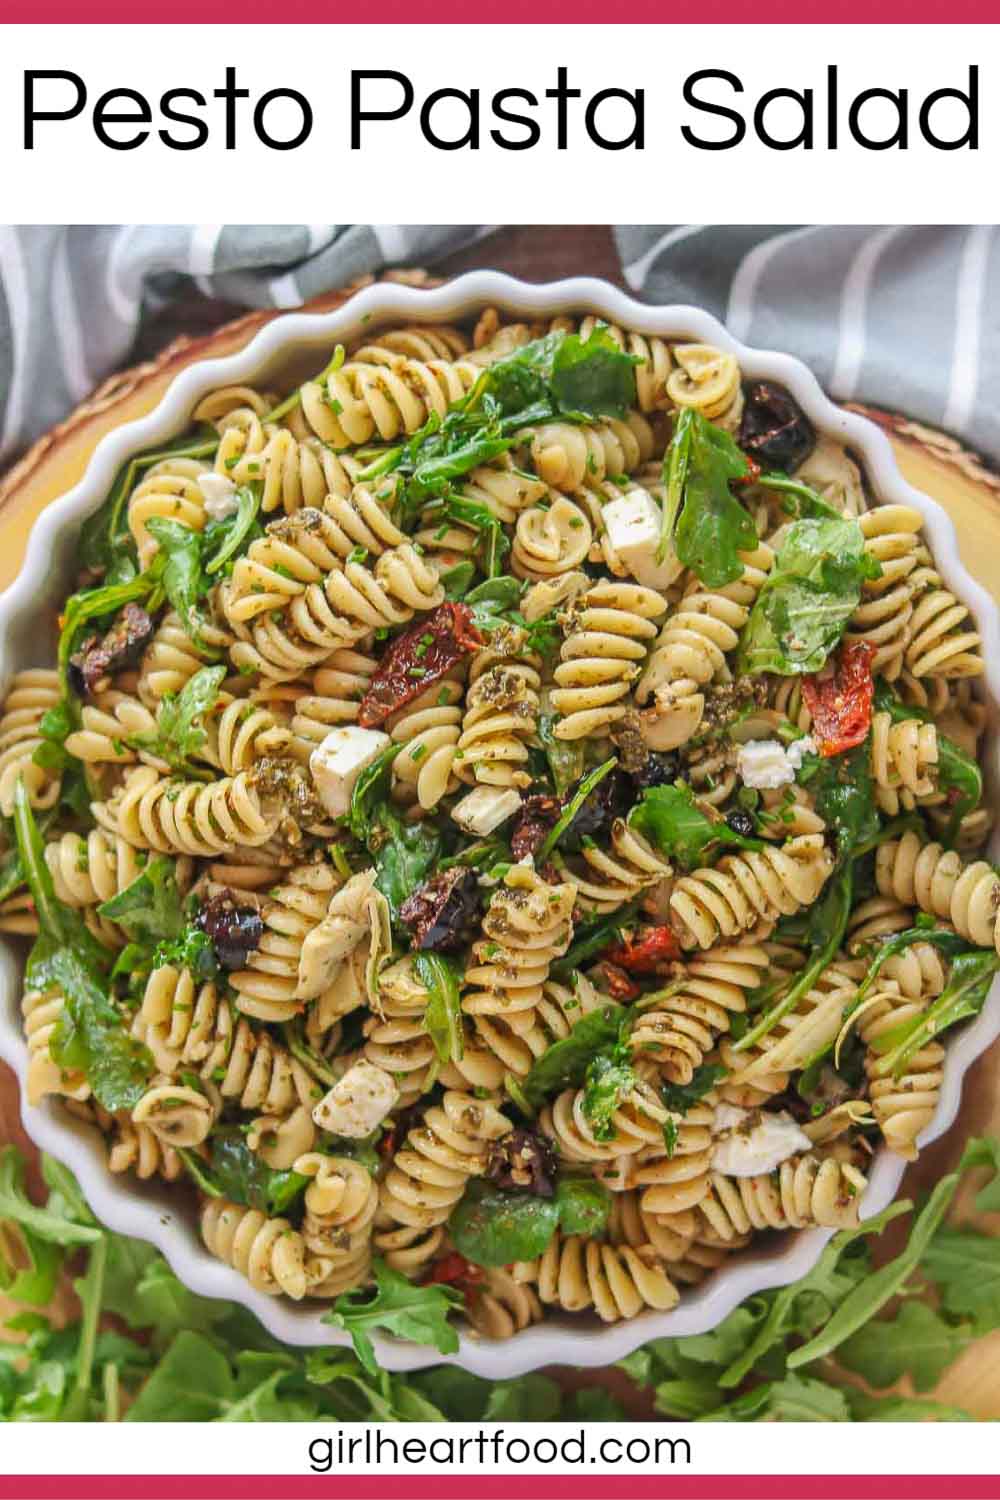 Mediterranean Pesto Pasta Salad Recipe | Girl Heart Food®